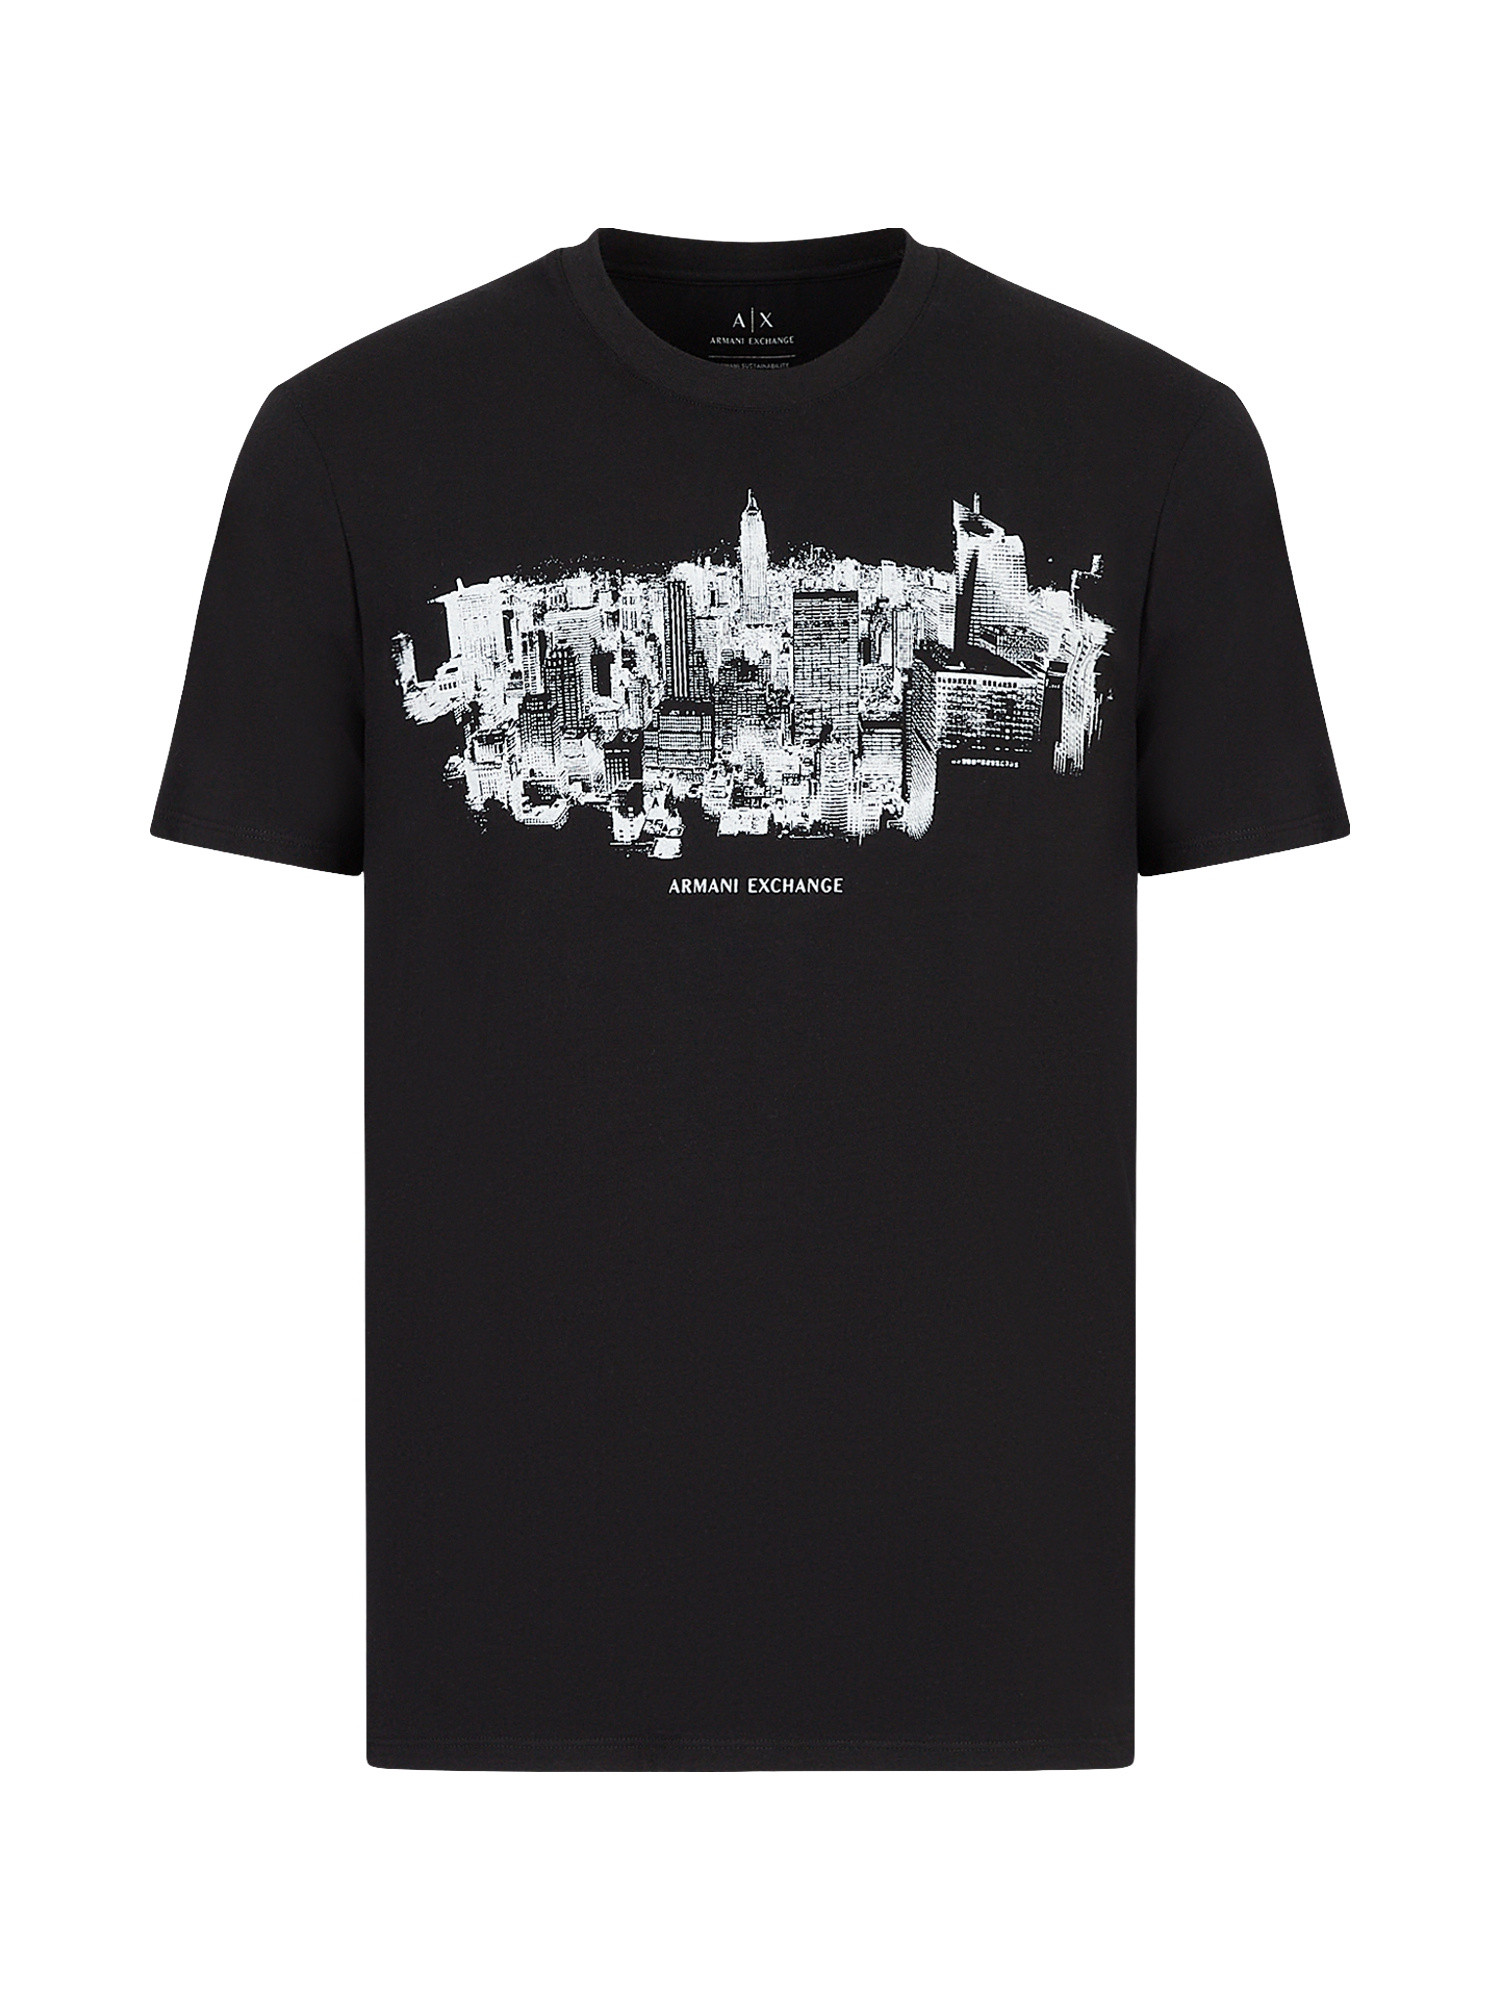 Armani Exchange - Slim fit printed T-shirt, Black, large image number 0